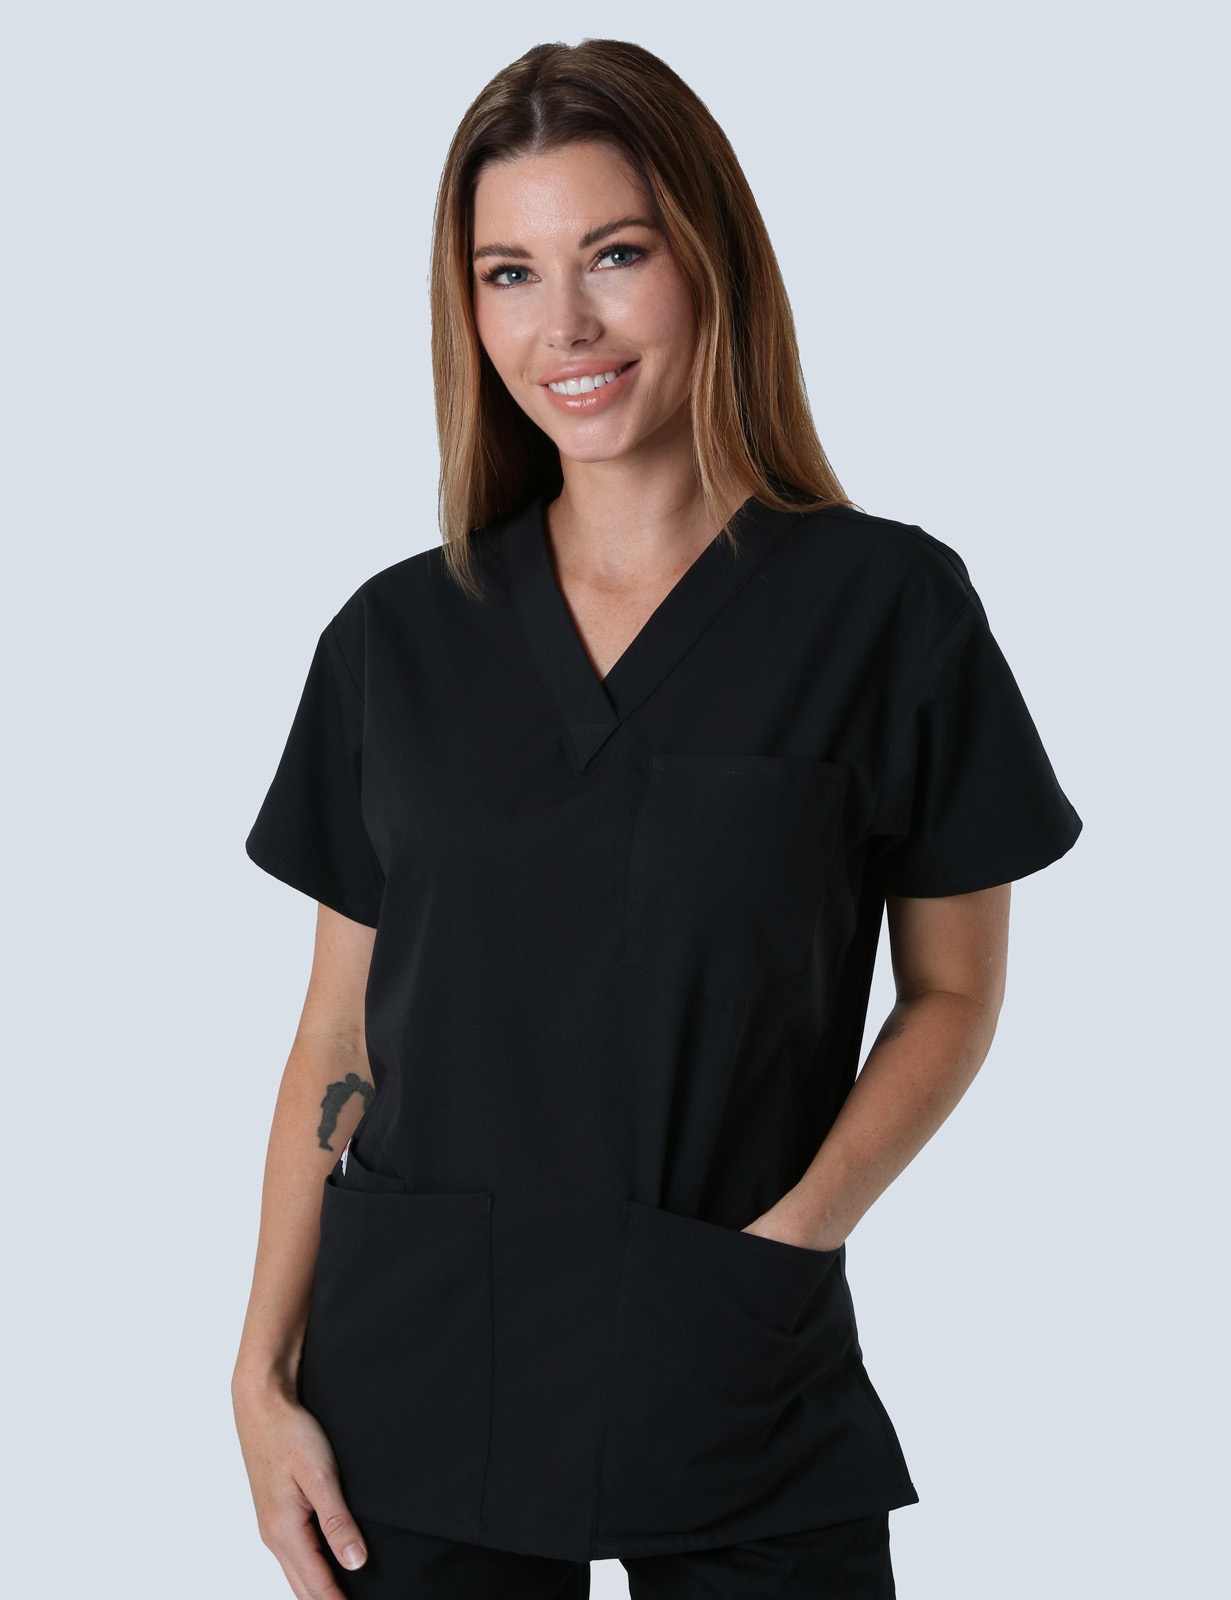 Northern Hospital - ED Nurse (4 Pocket Scrub Top in Black incl Logos)